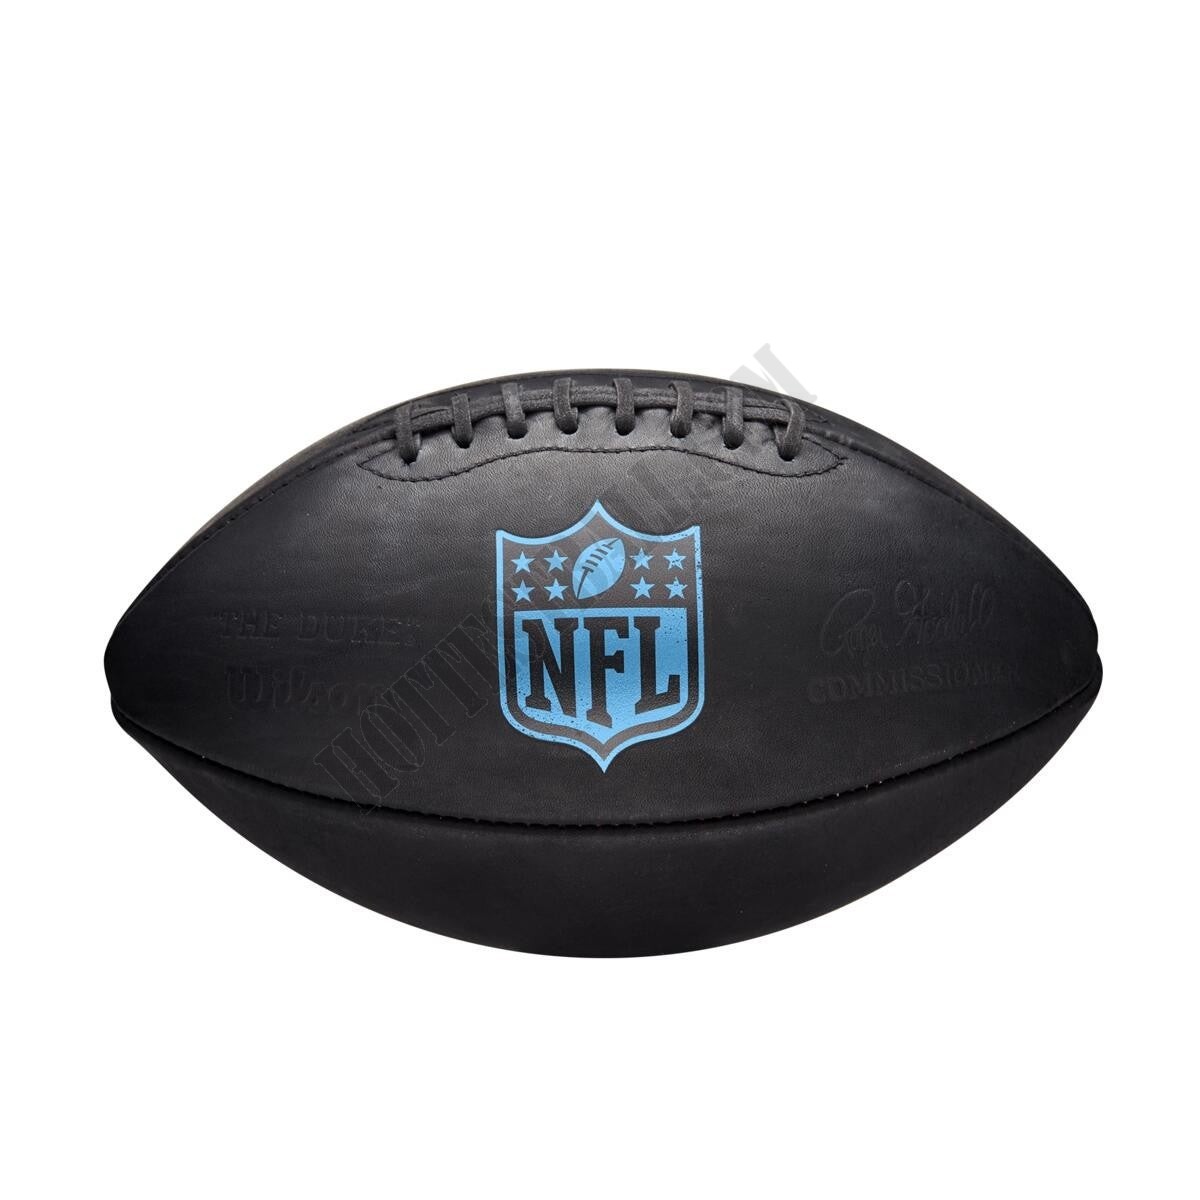 The Duke NFL Football Limited Black Edition - Wilson Discount Store - The Duke NFL Football Limited Black Edition - Wilson Discount Store